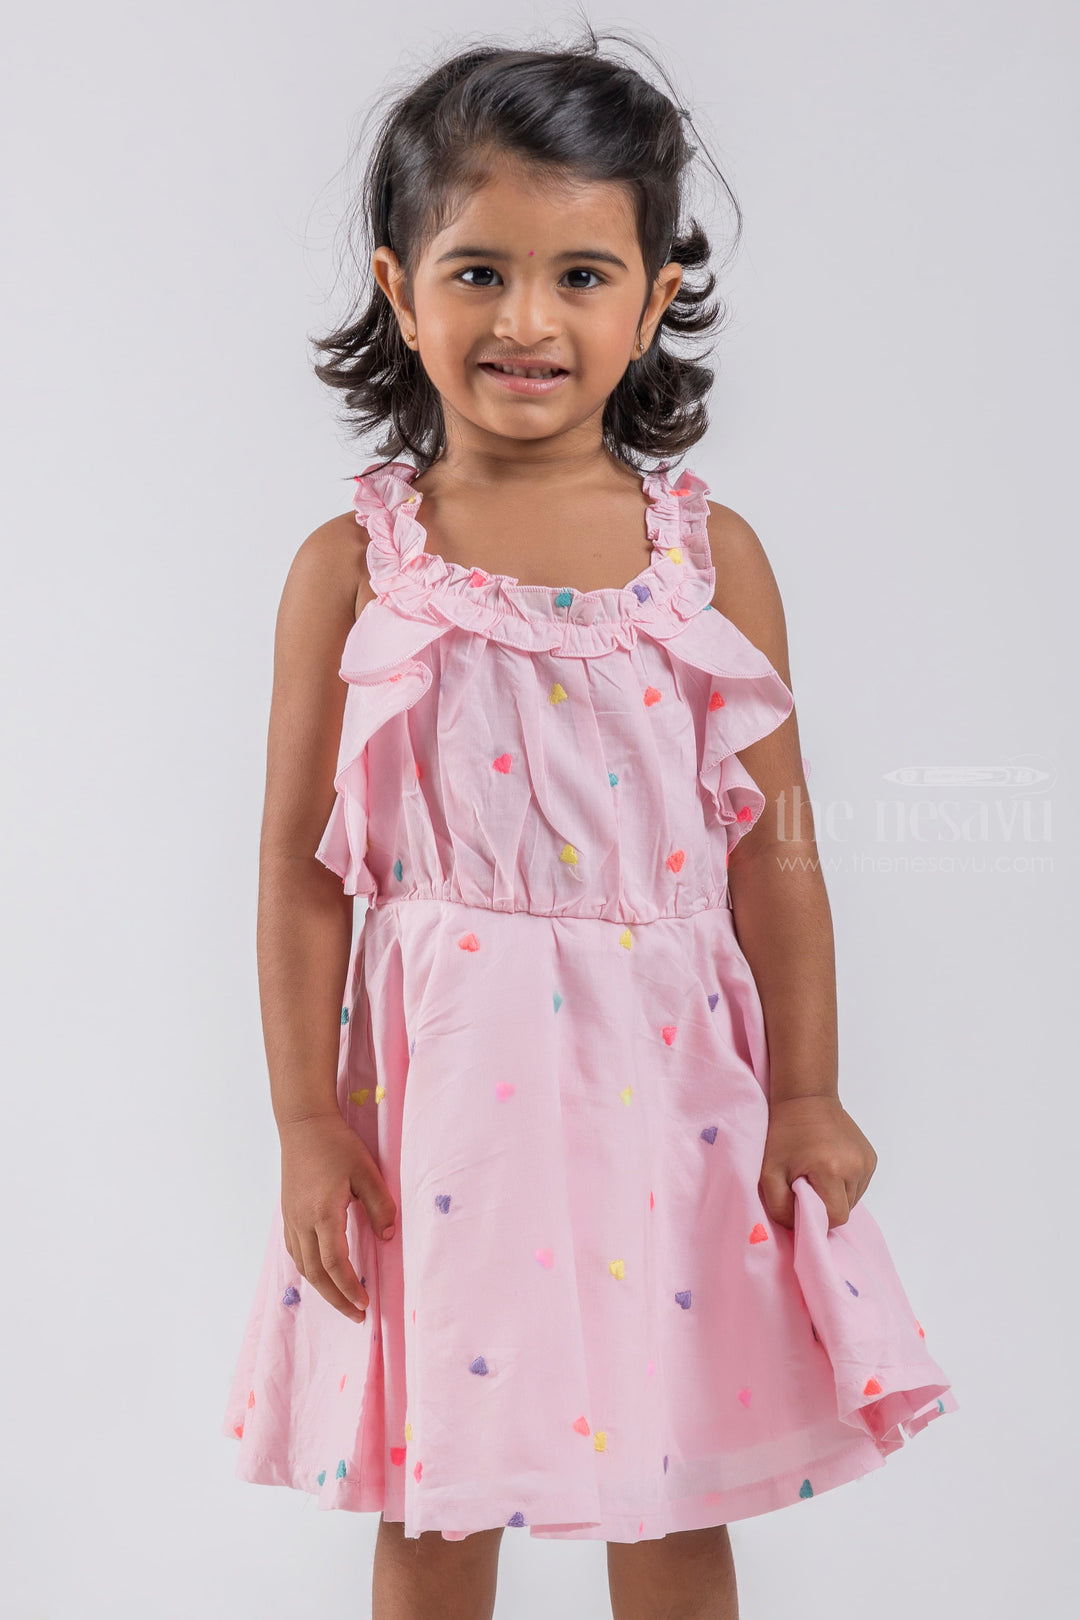 The Nesavu Baby Cotton Frocks Pink Sleeveless Baby Frock with Heartin Butta Embroidery and Ruffled Neckline psr silks Nesavu